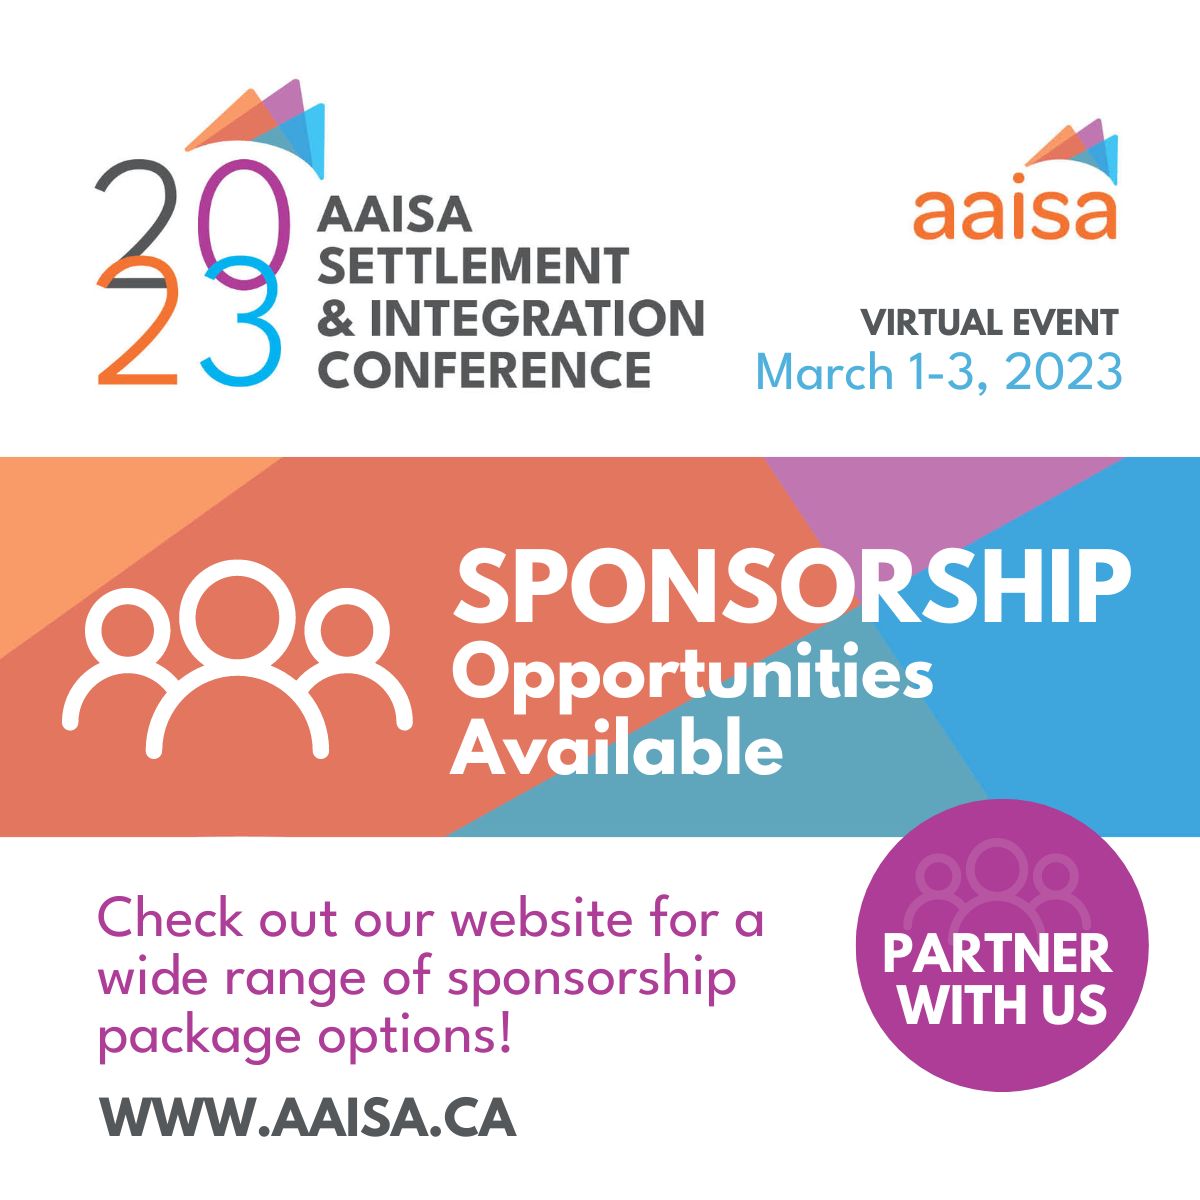 2023 AAISA Settlement & Integration Conference